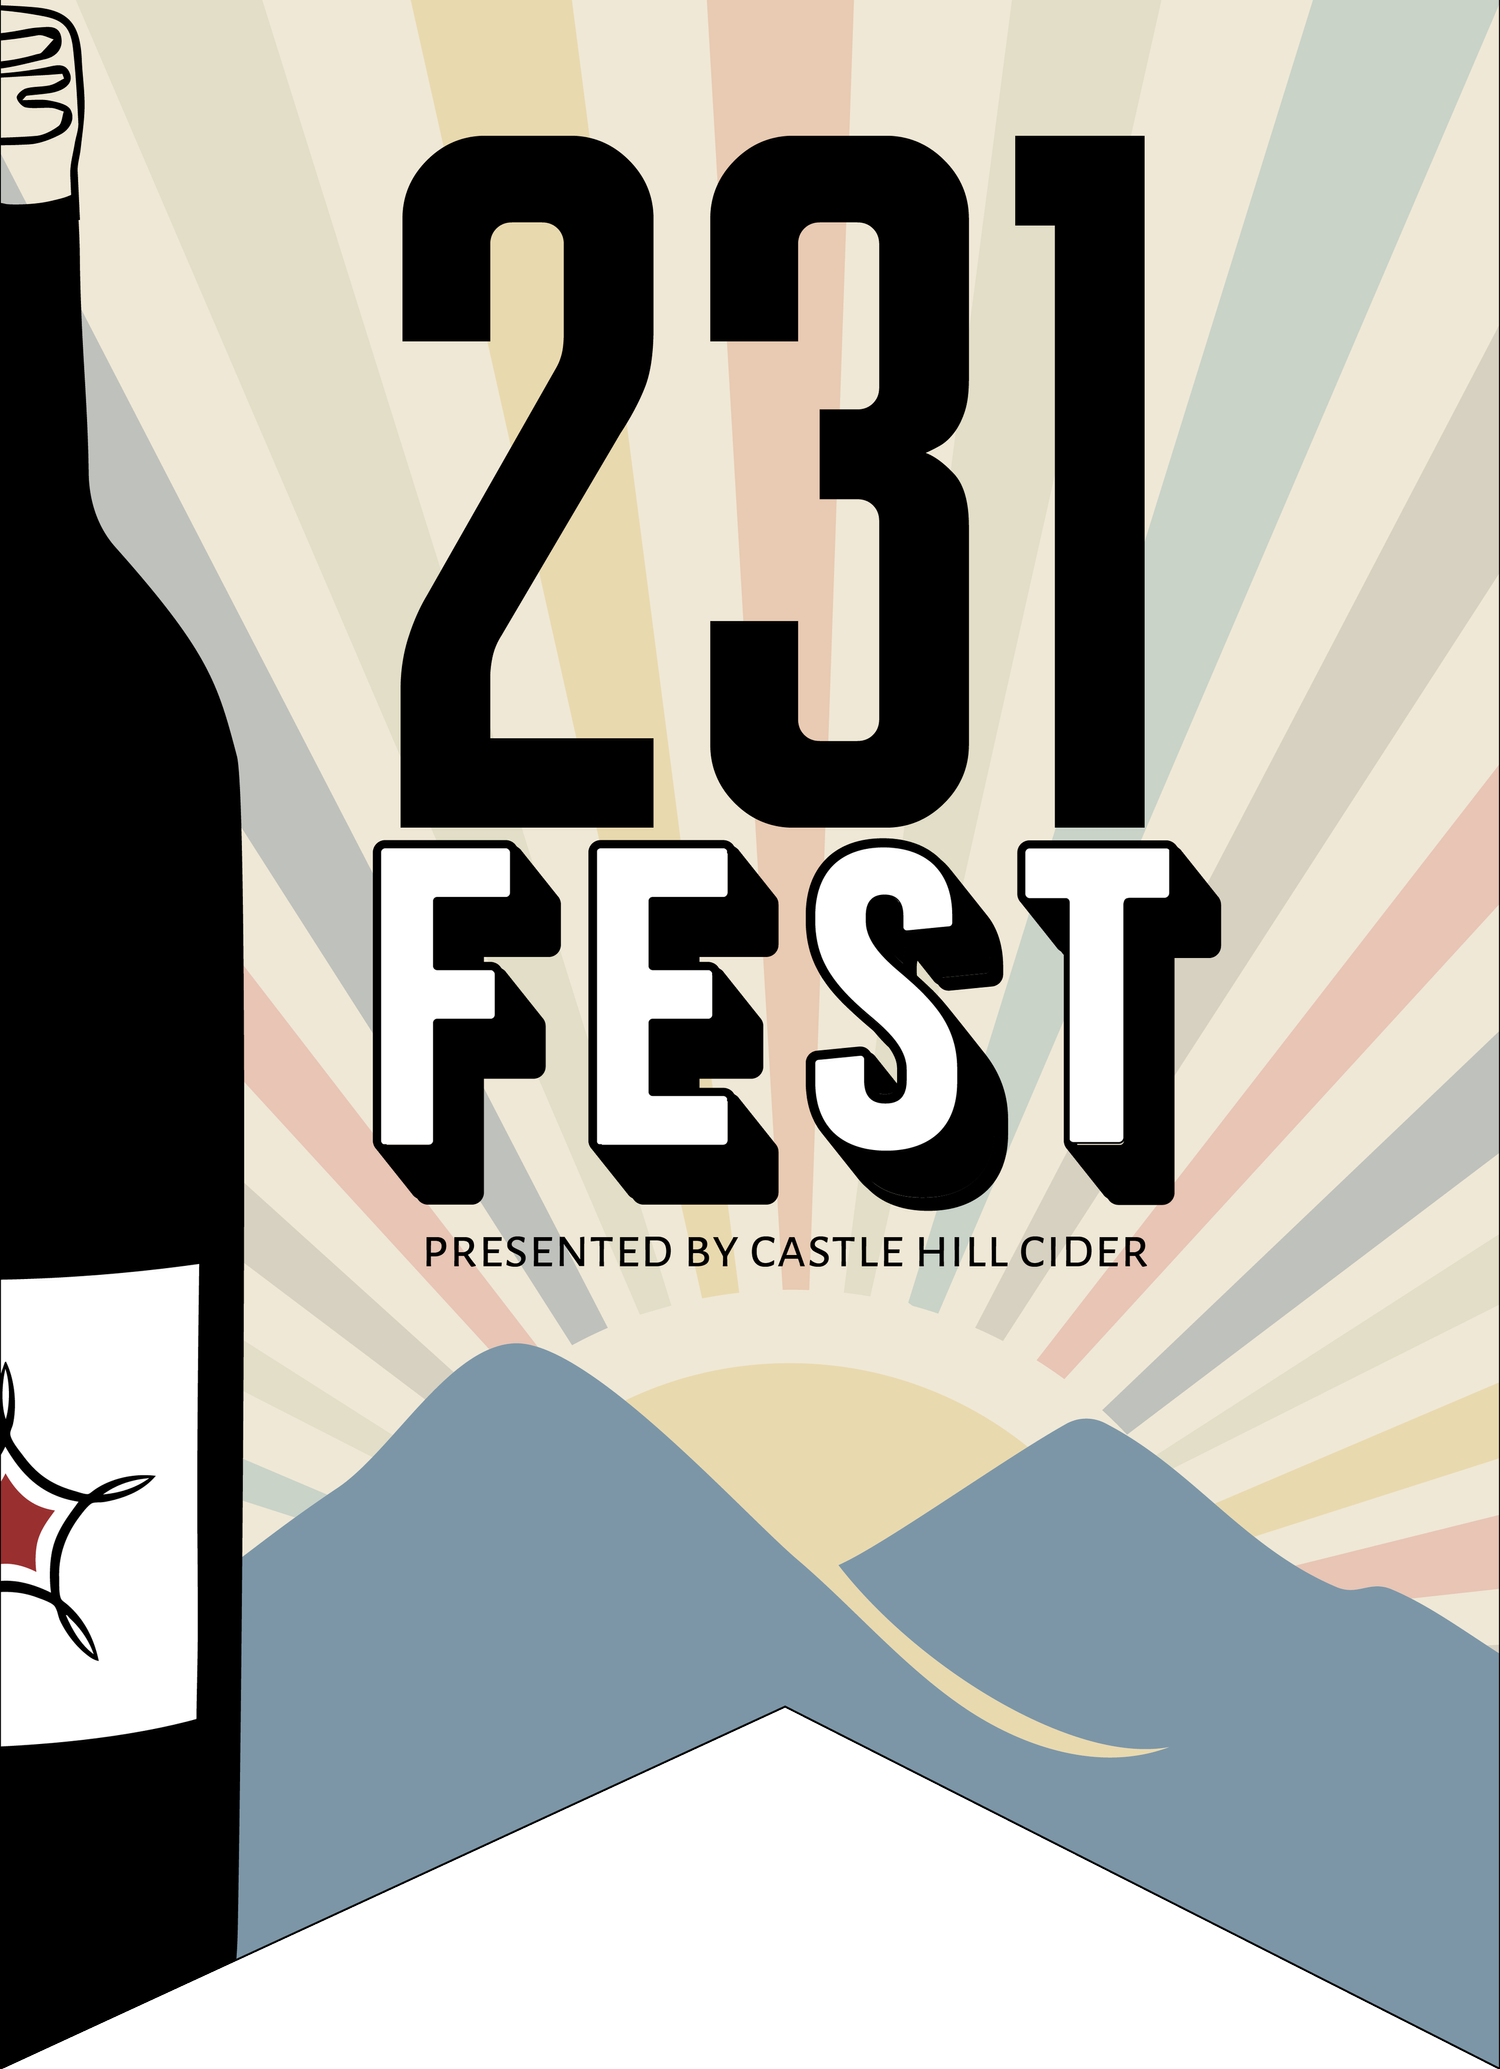 231 Fest